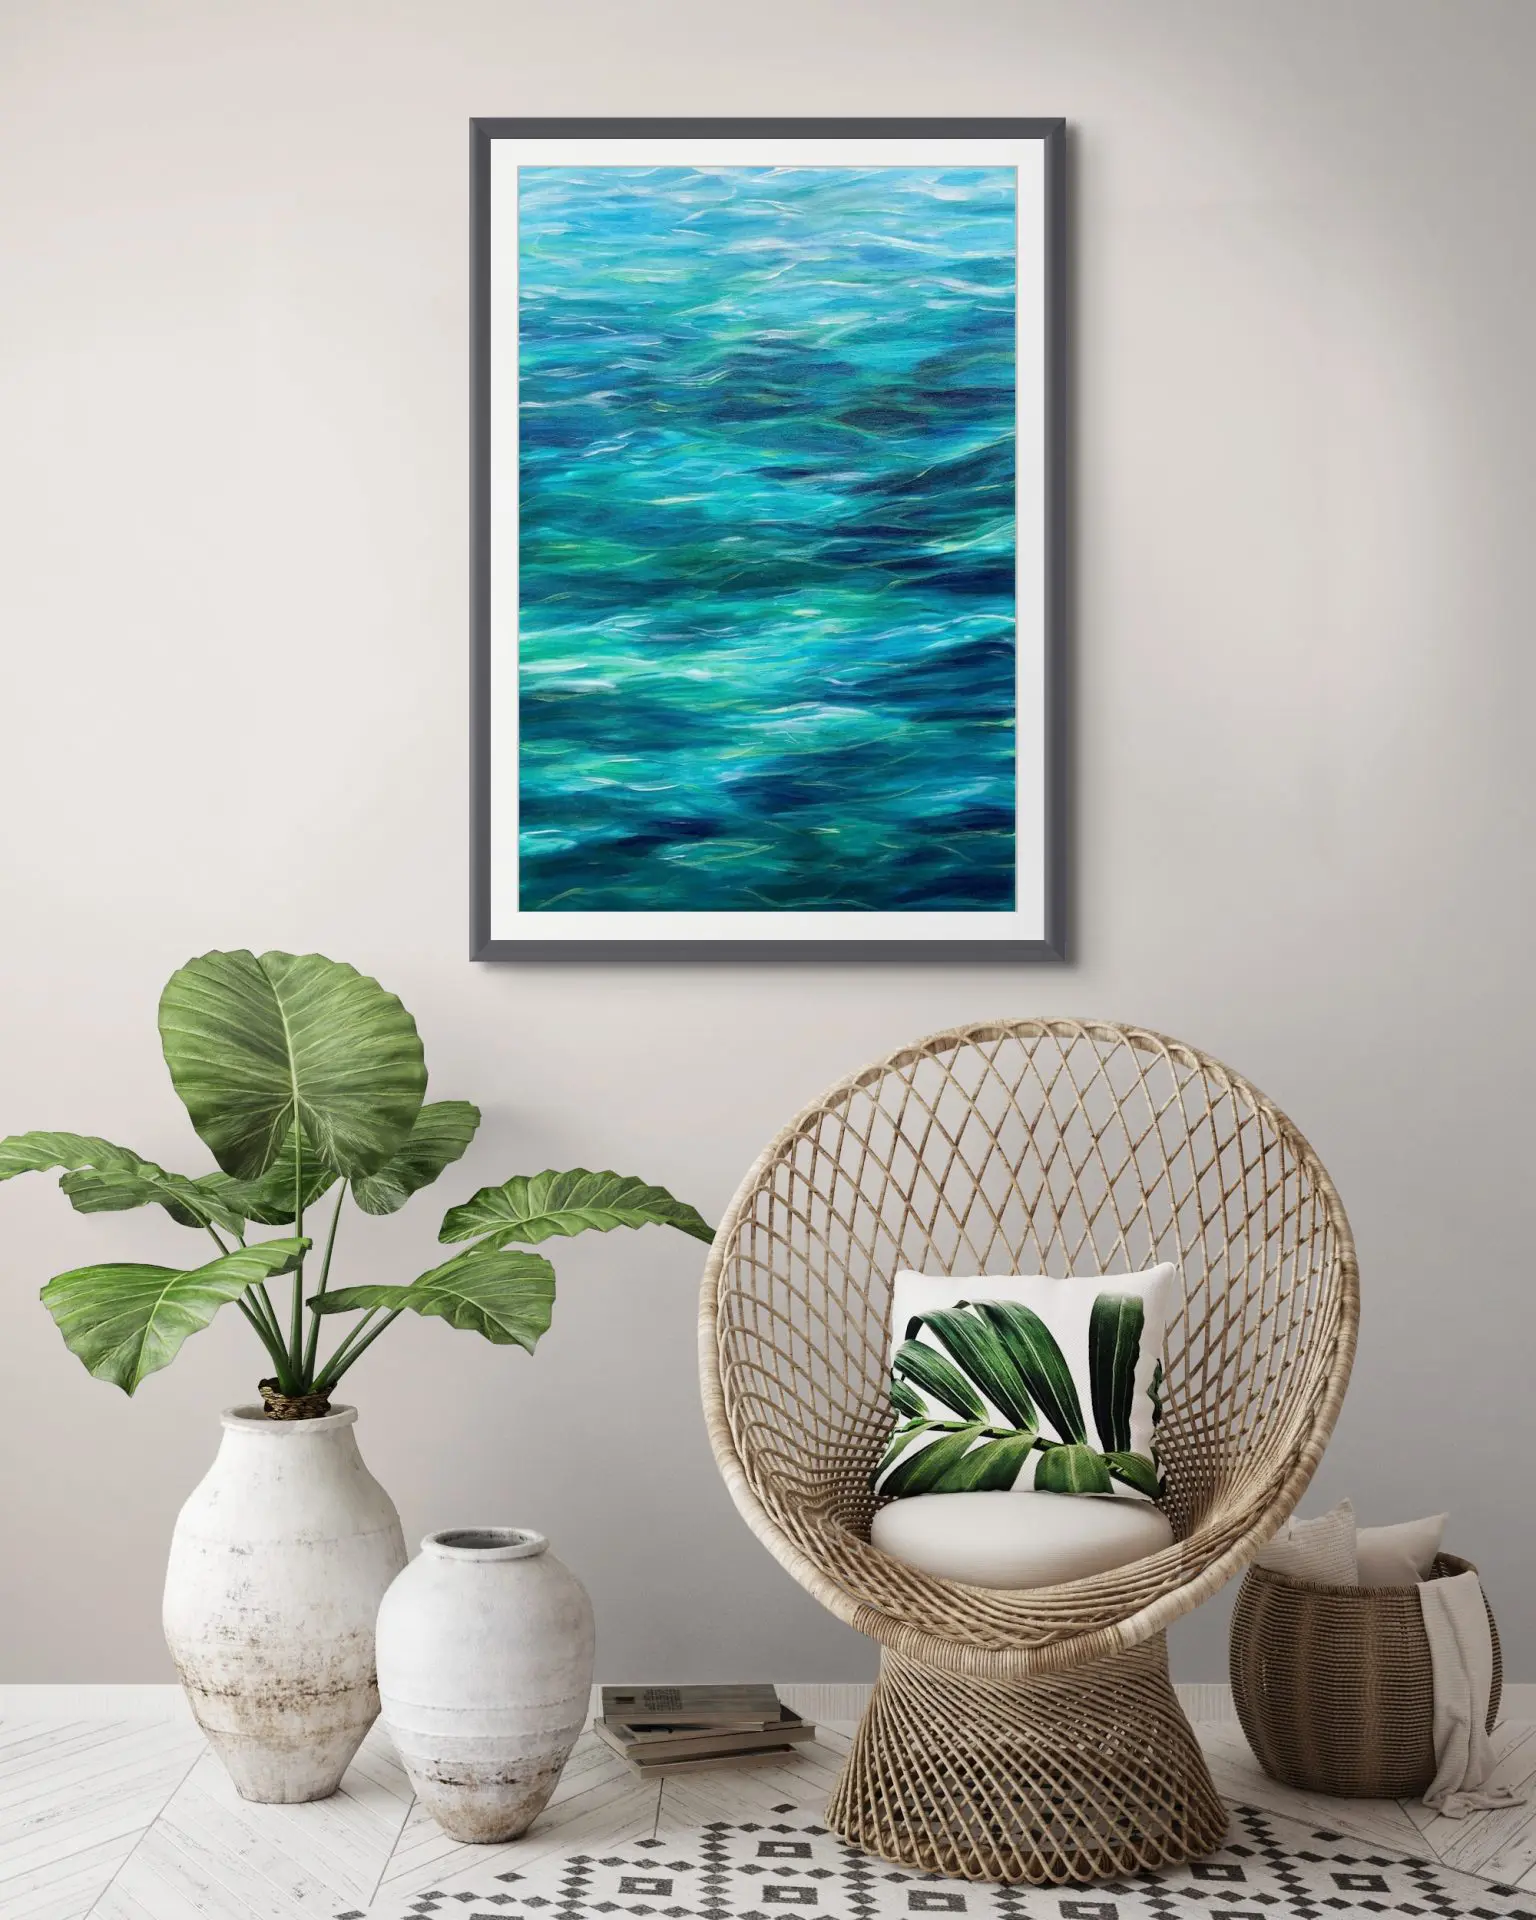 Turquoise Sea II Fraed Giclée Print in a room setting